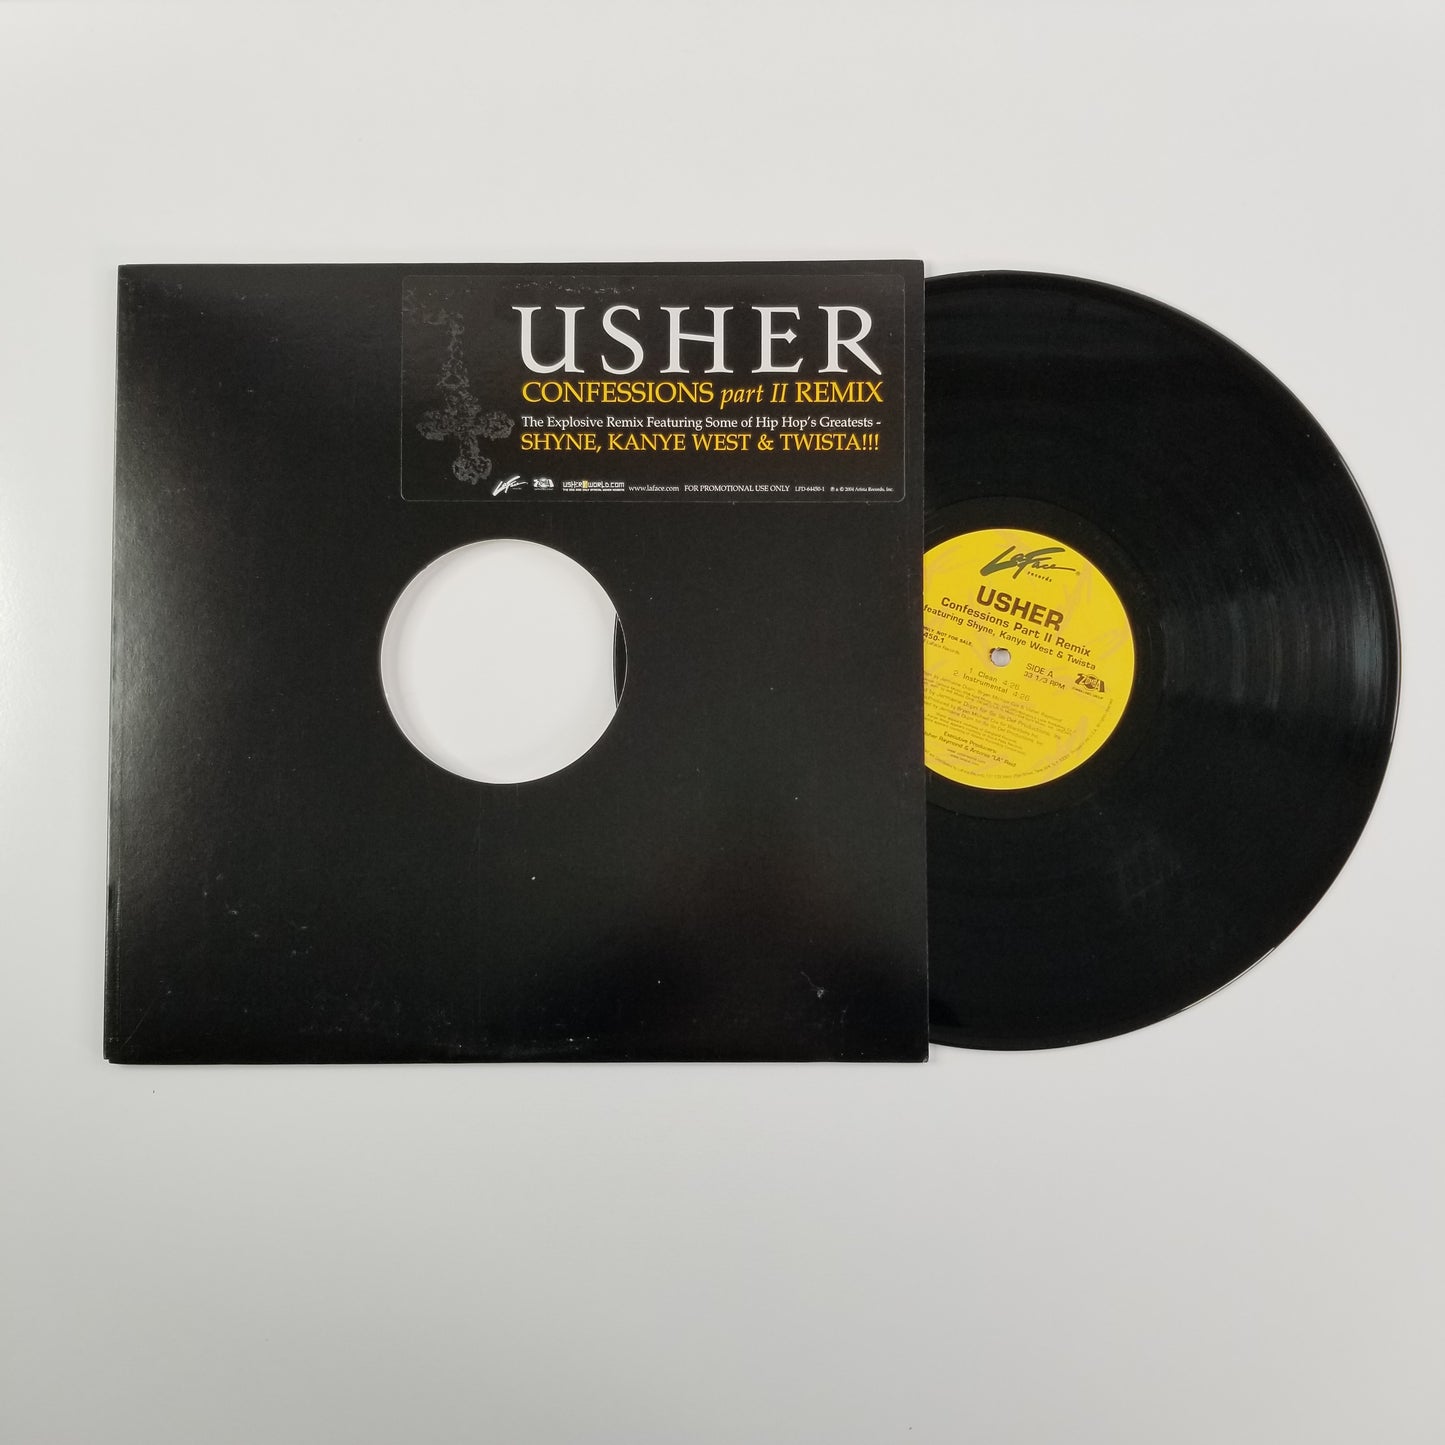 Usher - Confessions Part II Remix featuring Shyne, Kanye West, & Twista (2004, 12" Single)